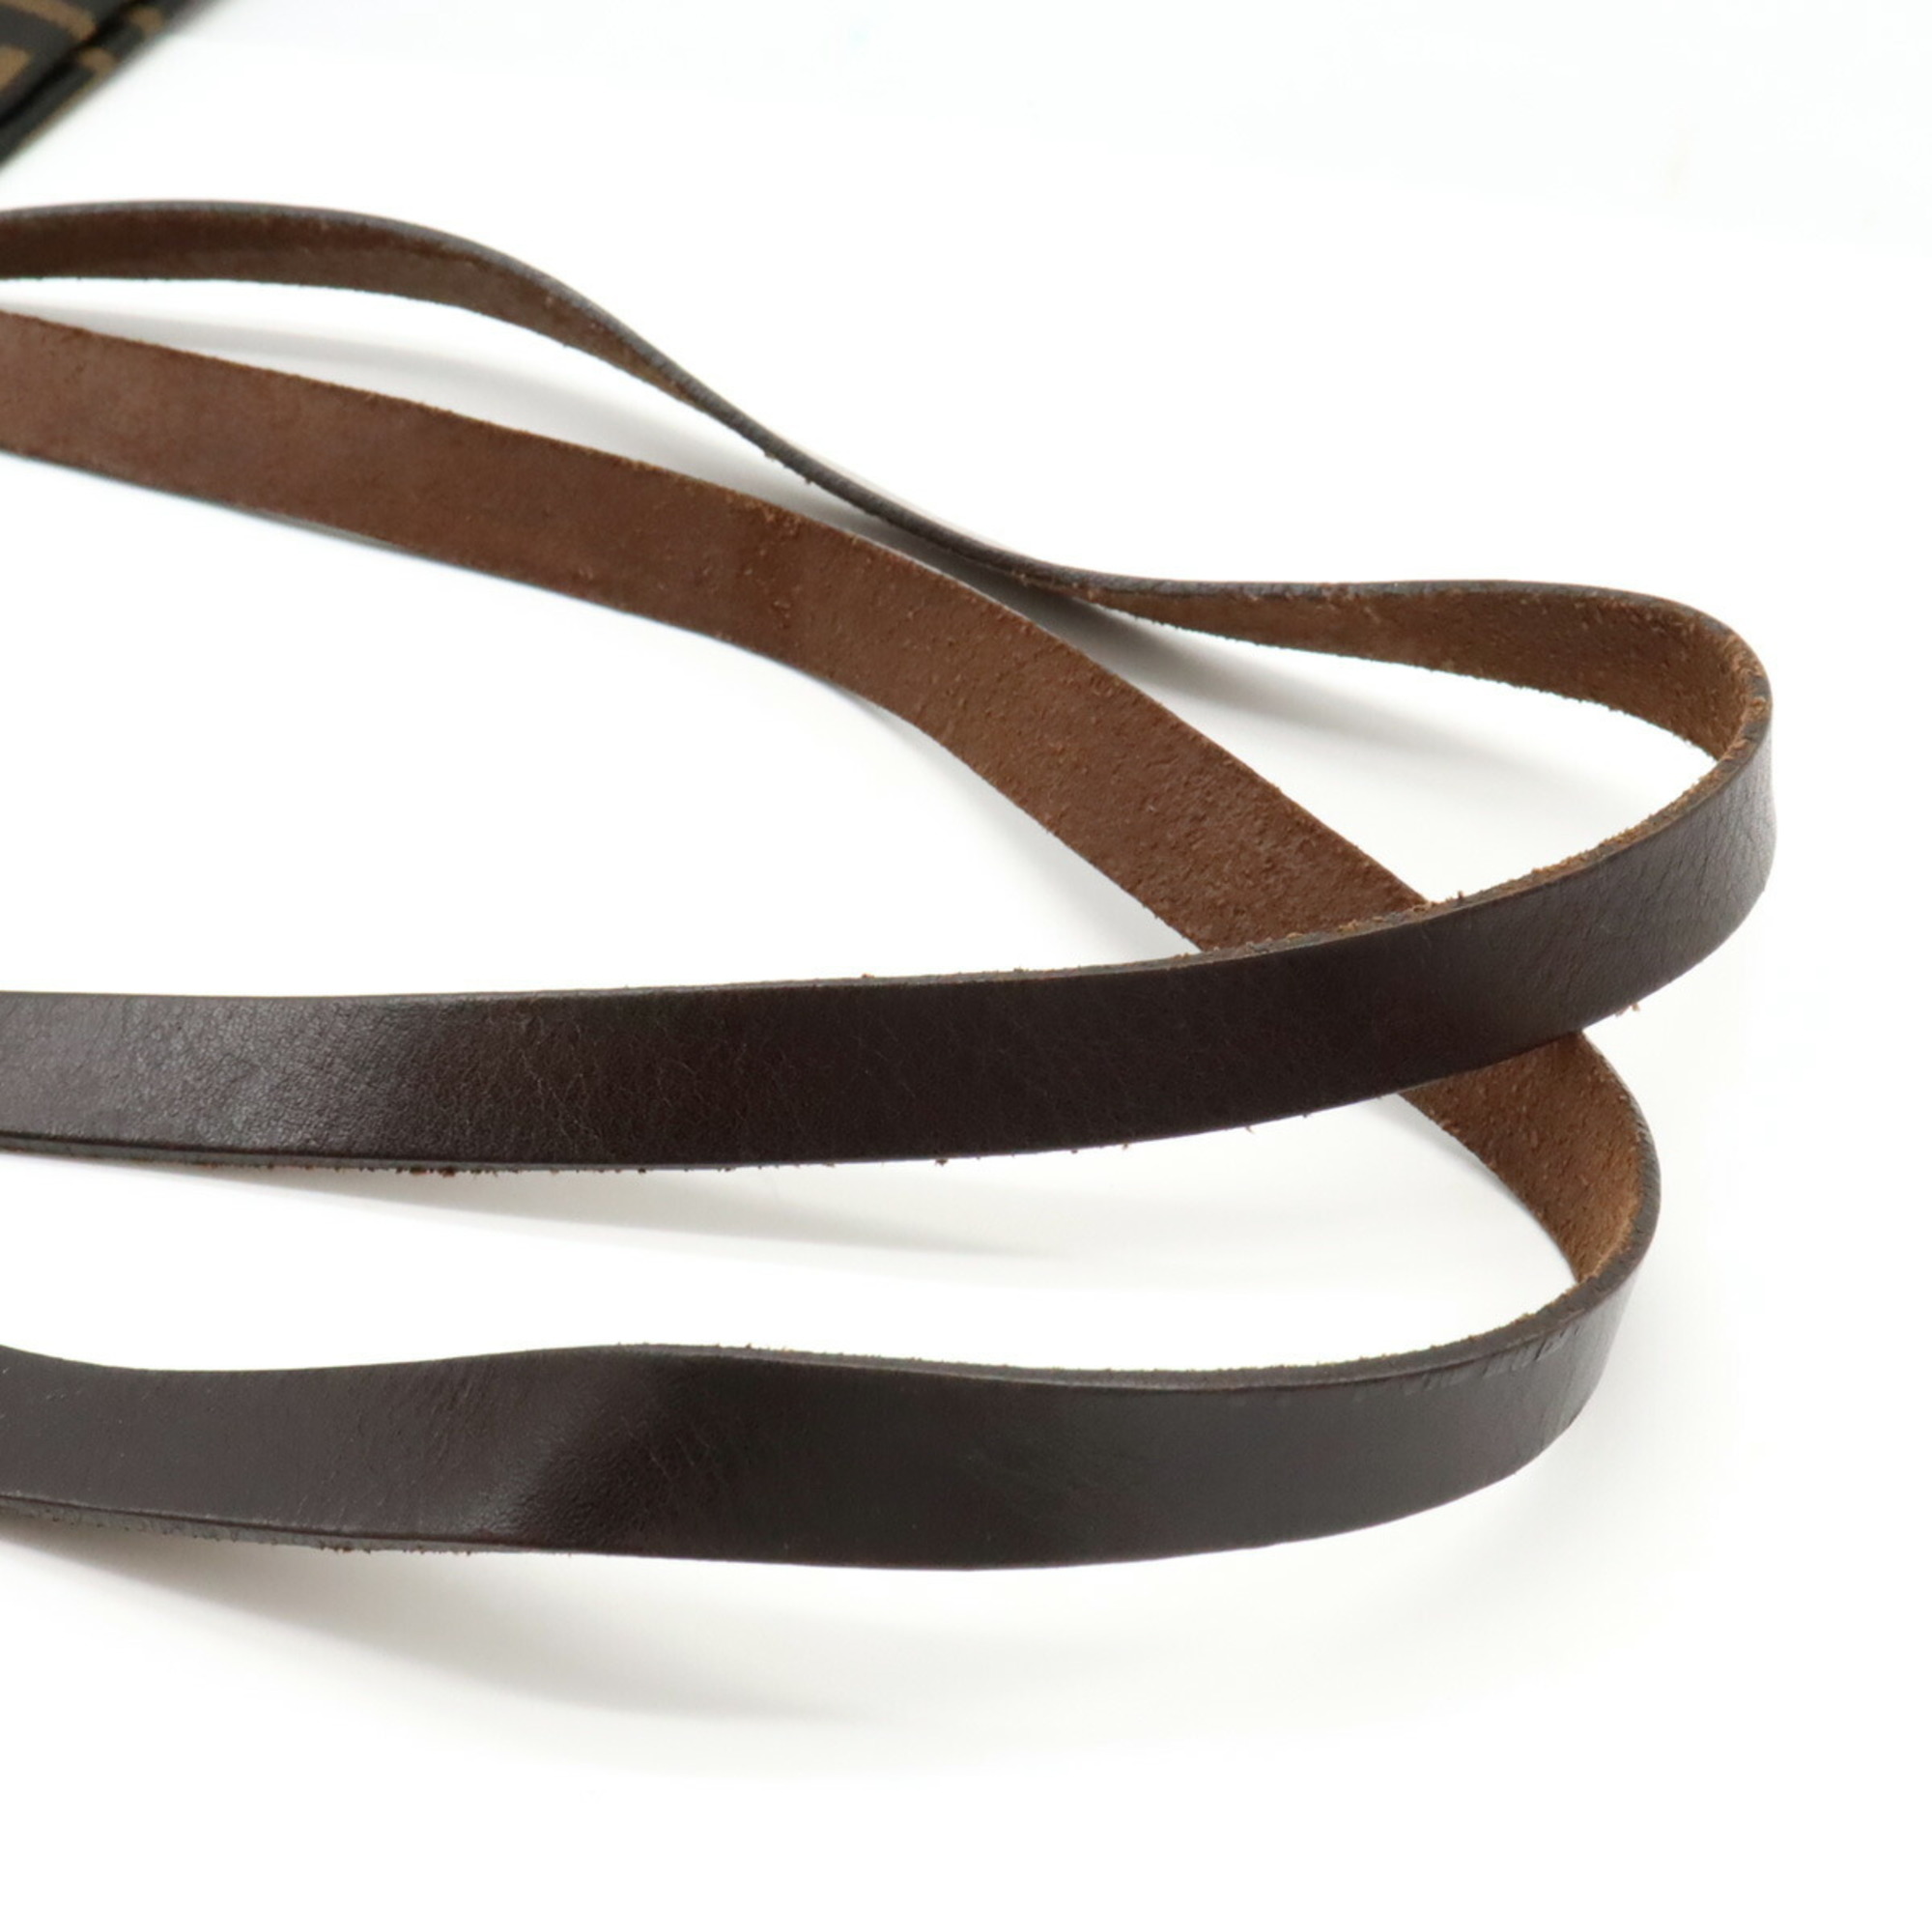 FENDI Zucca pattern tote bag shoulder nylon canvas leather khaki brown dark 15978